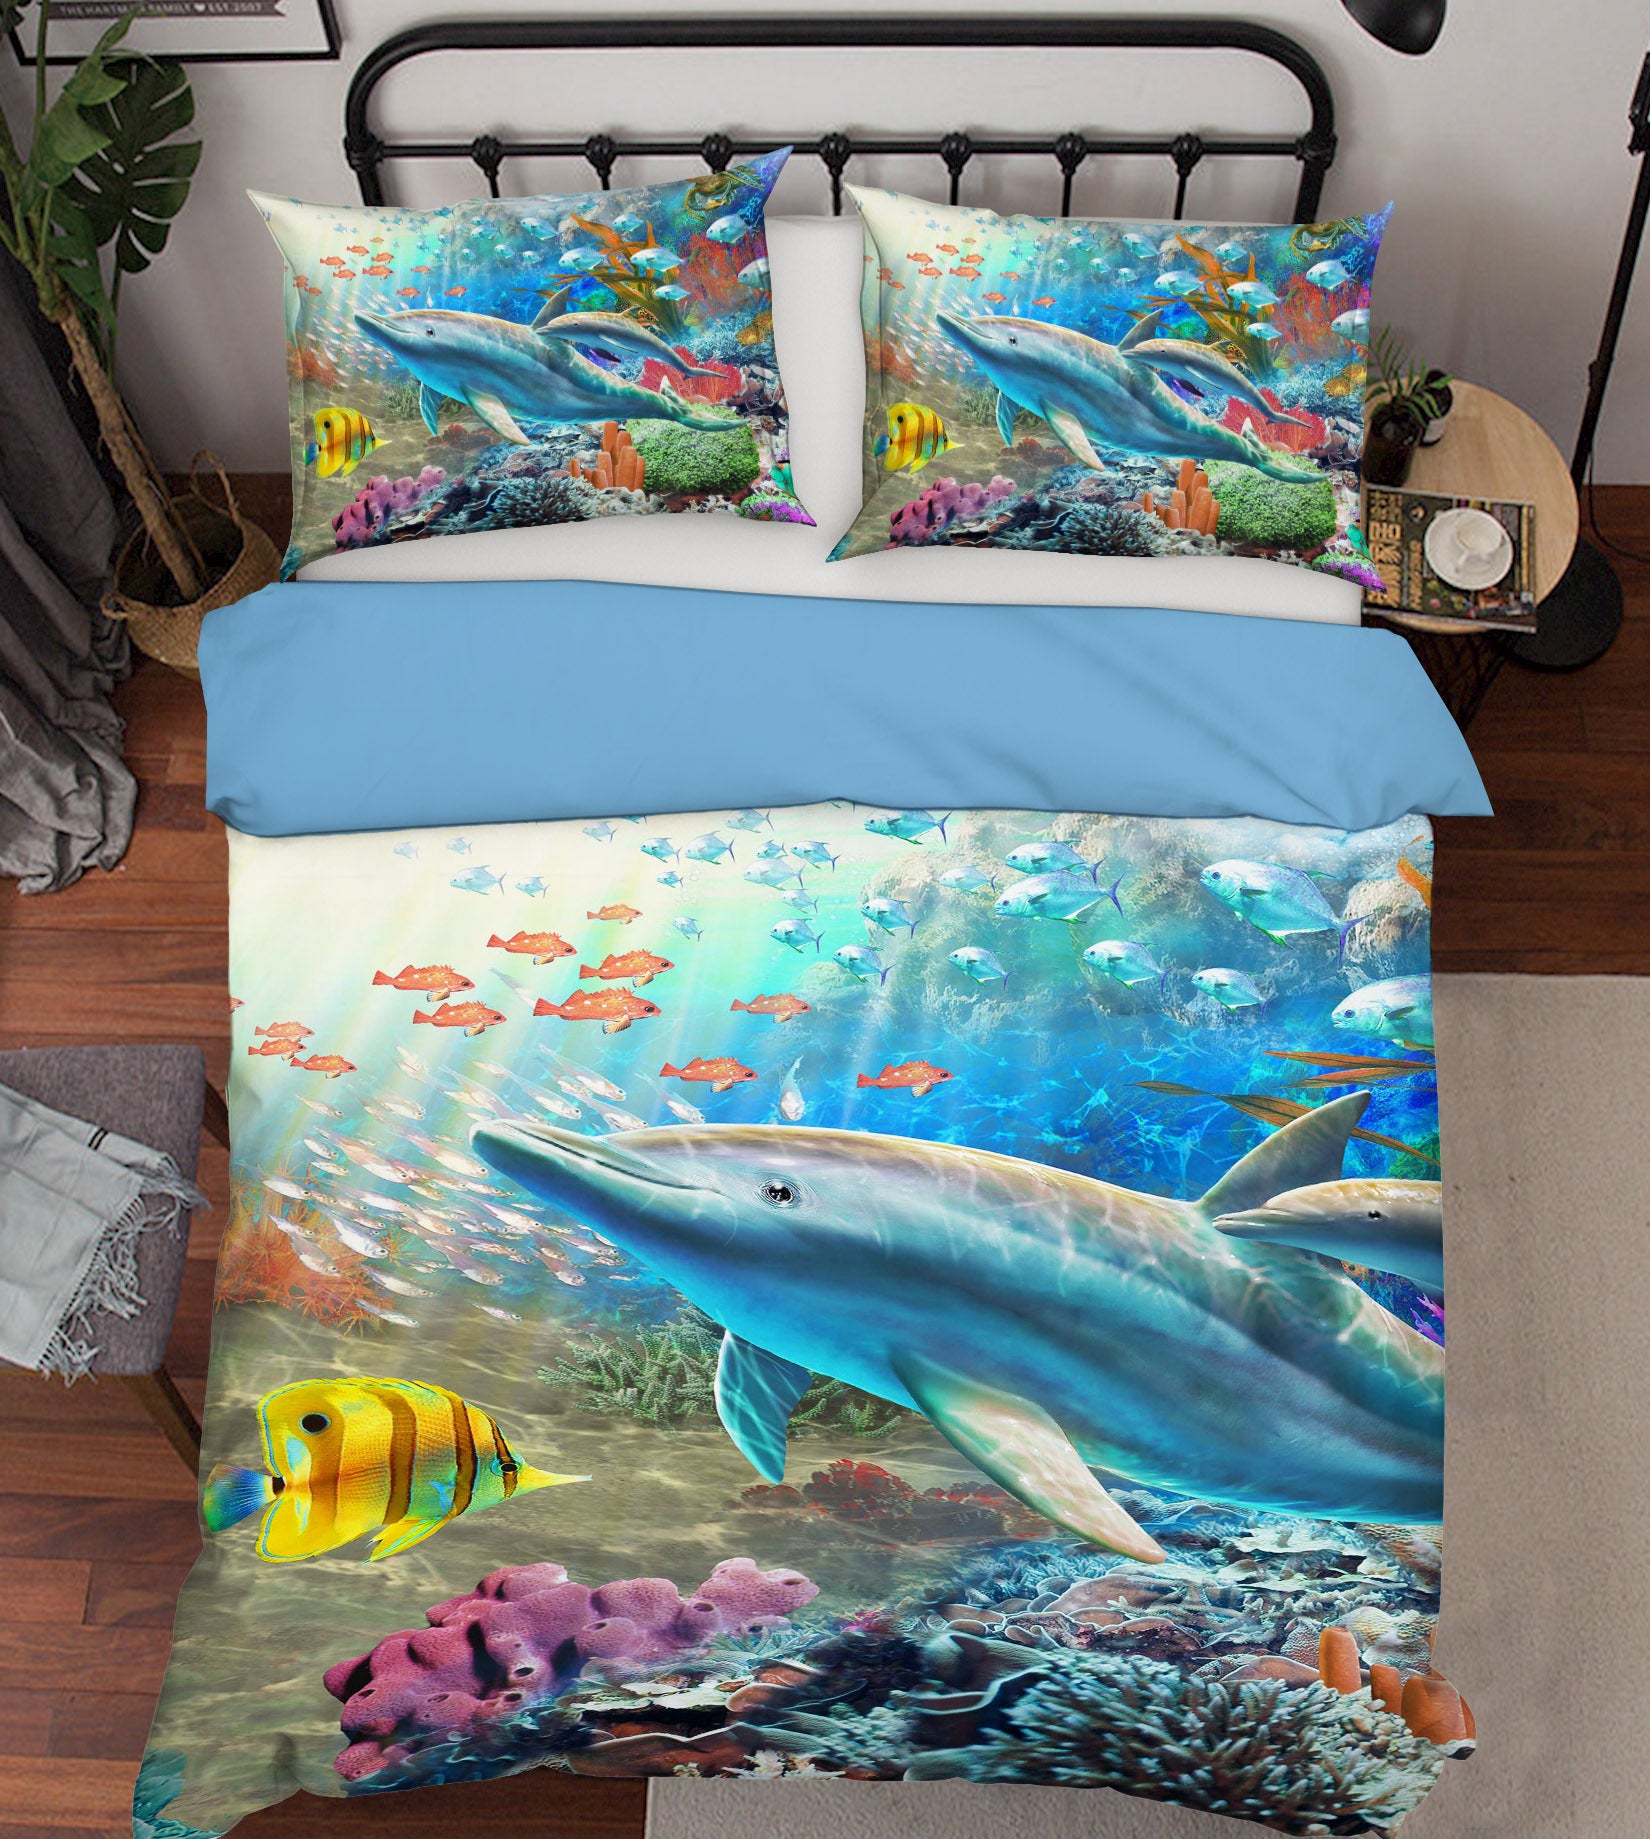 3D Undersea Fish School 2116 Adrian Chesterman Bedding Bed Pillowcases Quilt